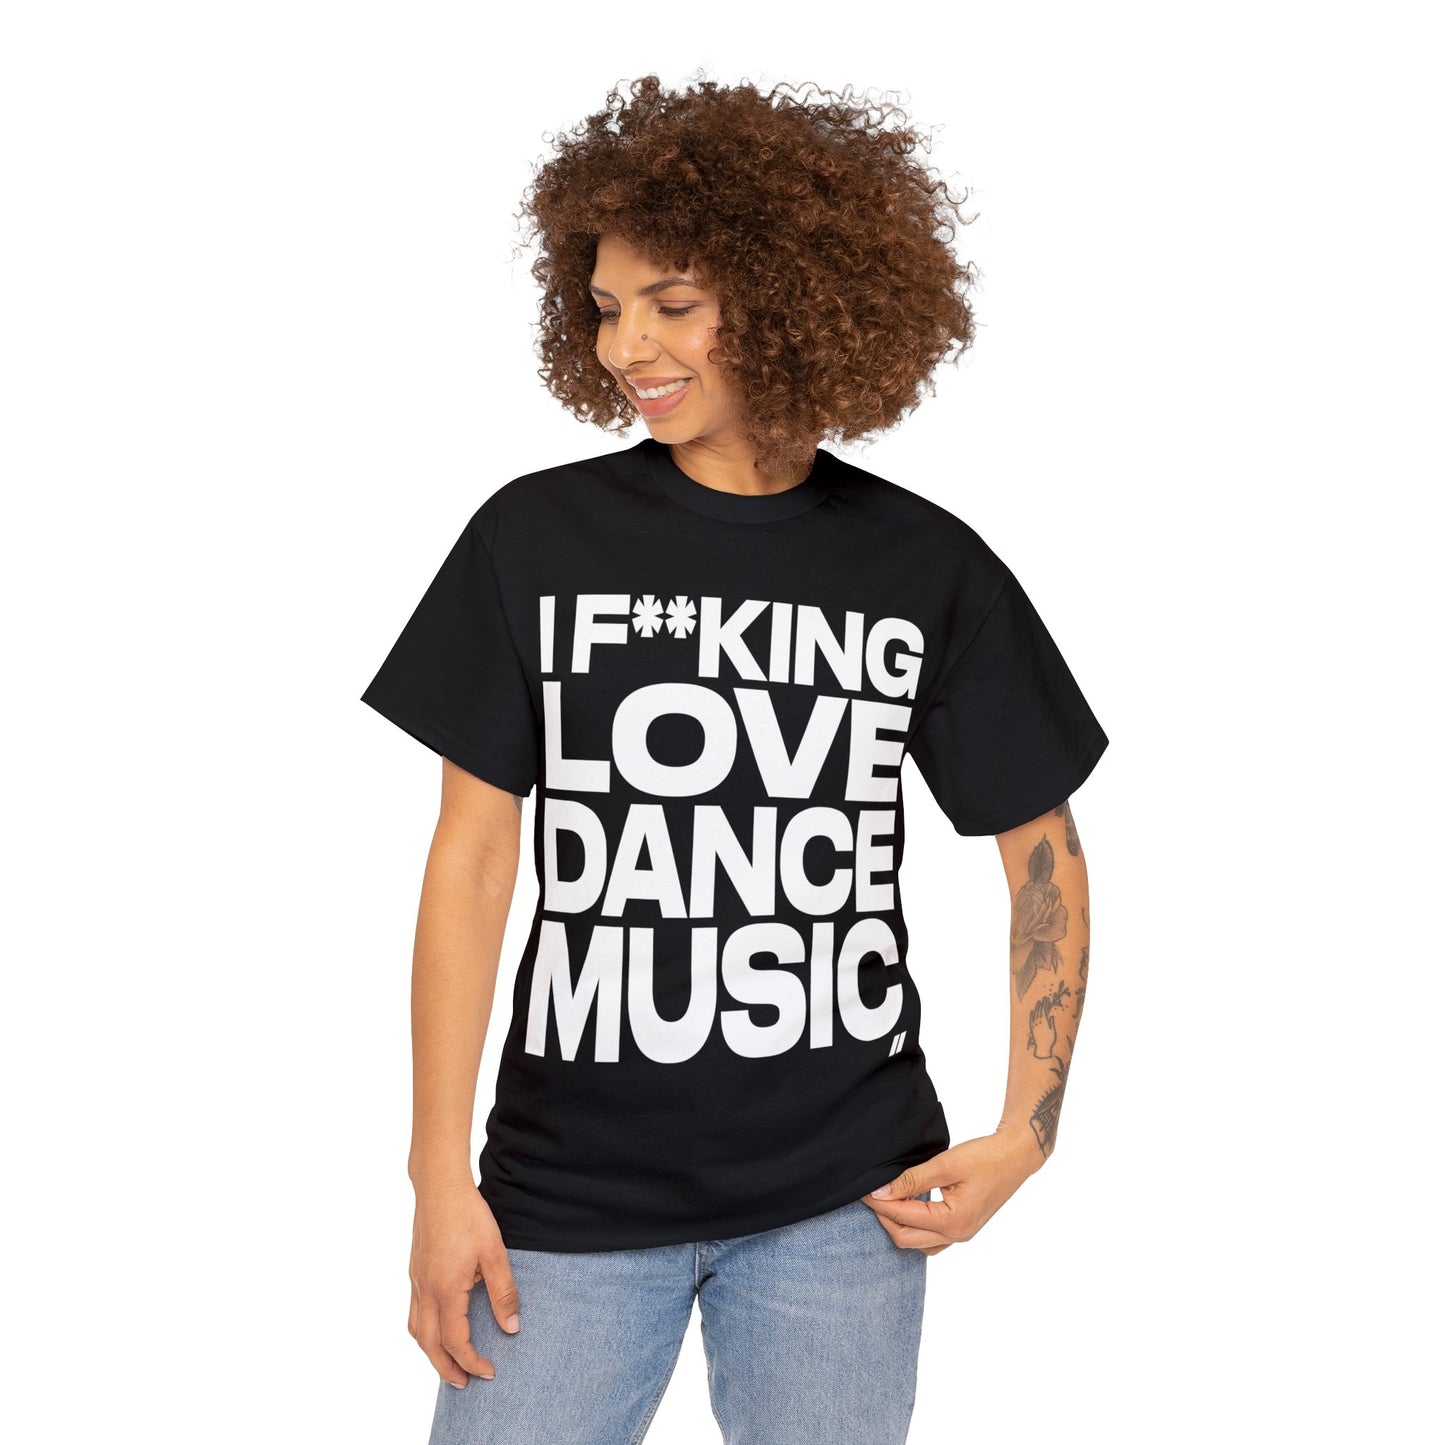 I F**king Love Dance Music Tee (Black / White)